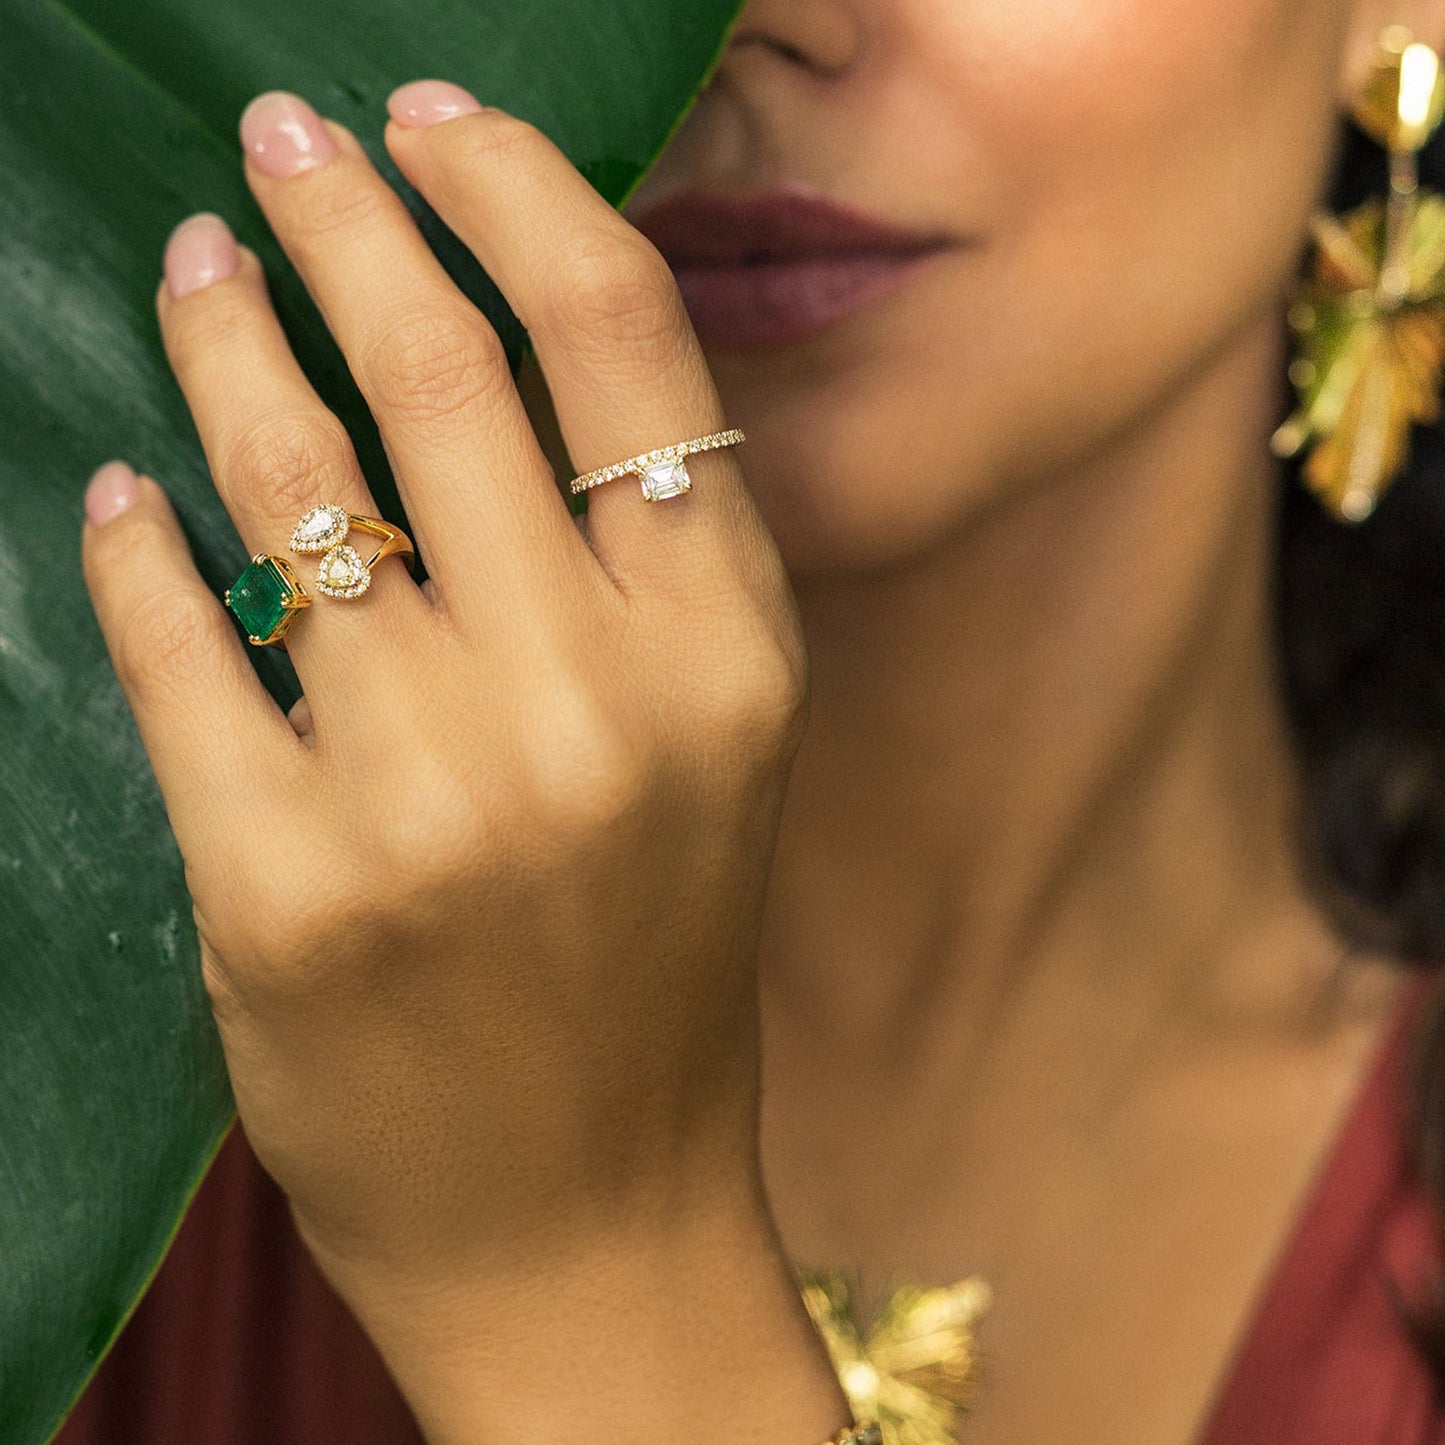 Multi Shaped Emerald and Diamond Ring